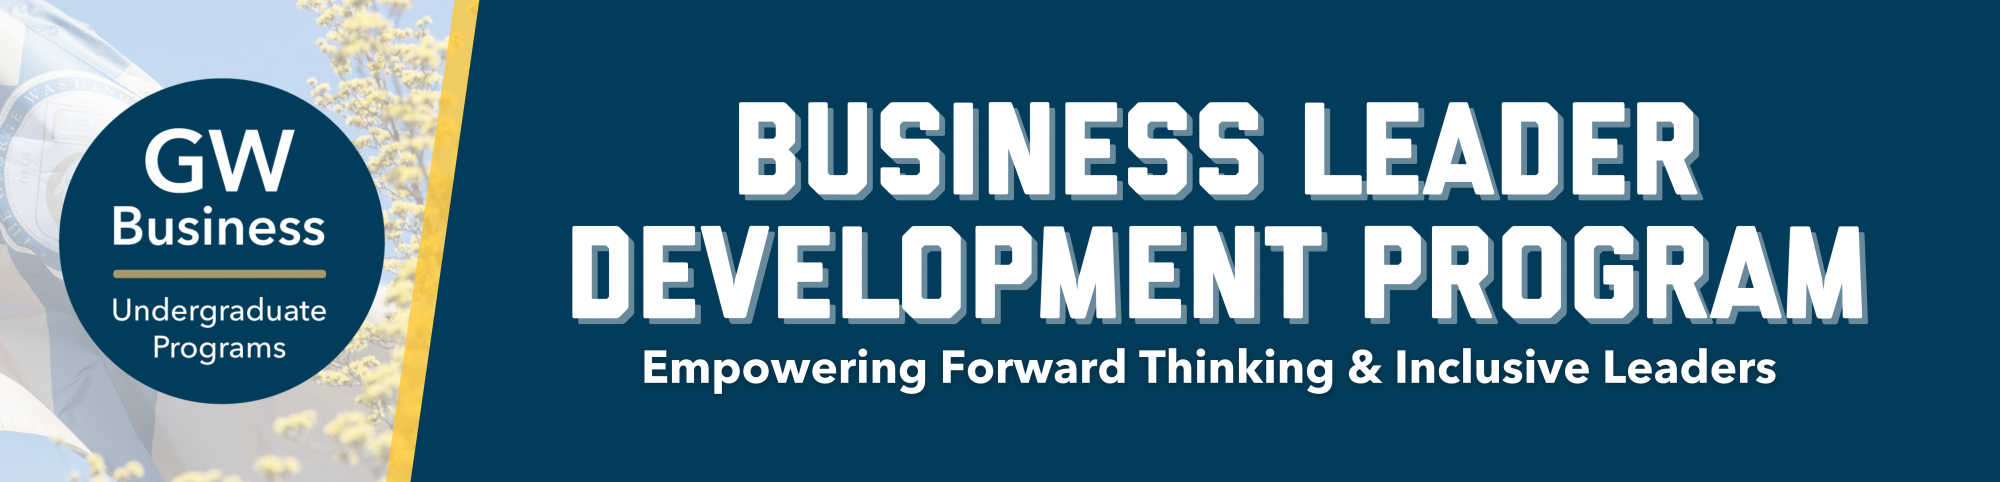 GW Business Undergraduate Programs Business Leader Development Program. Empowering Forward Thinking & Inclusive Leaders.